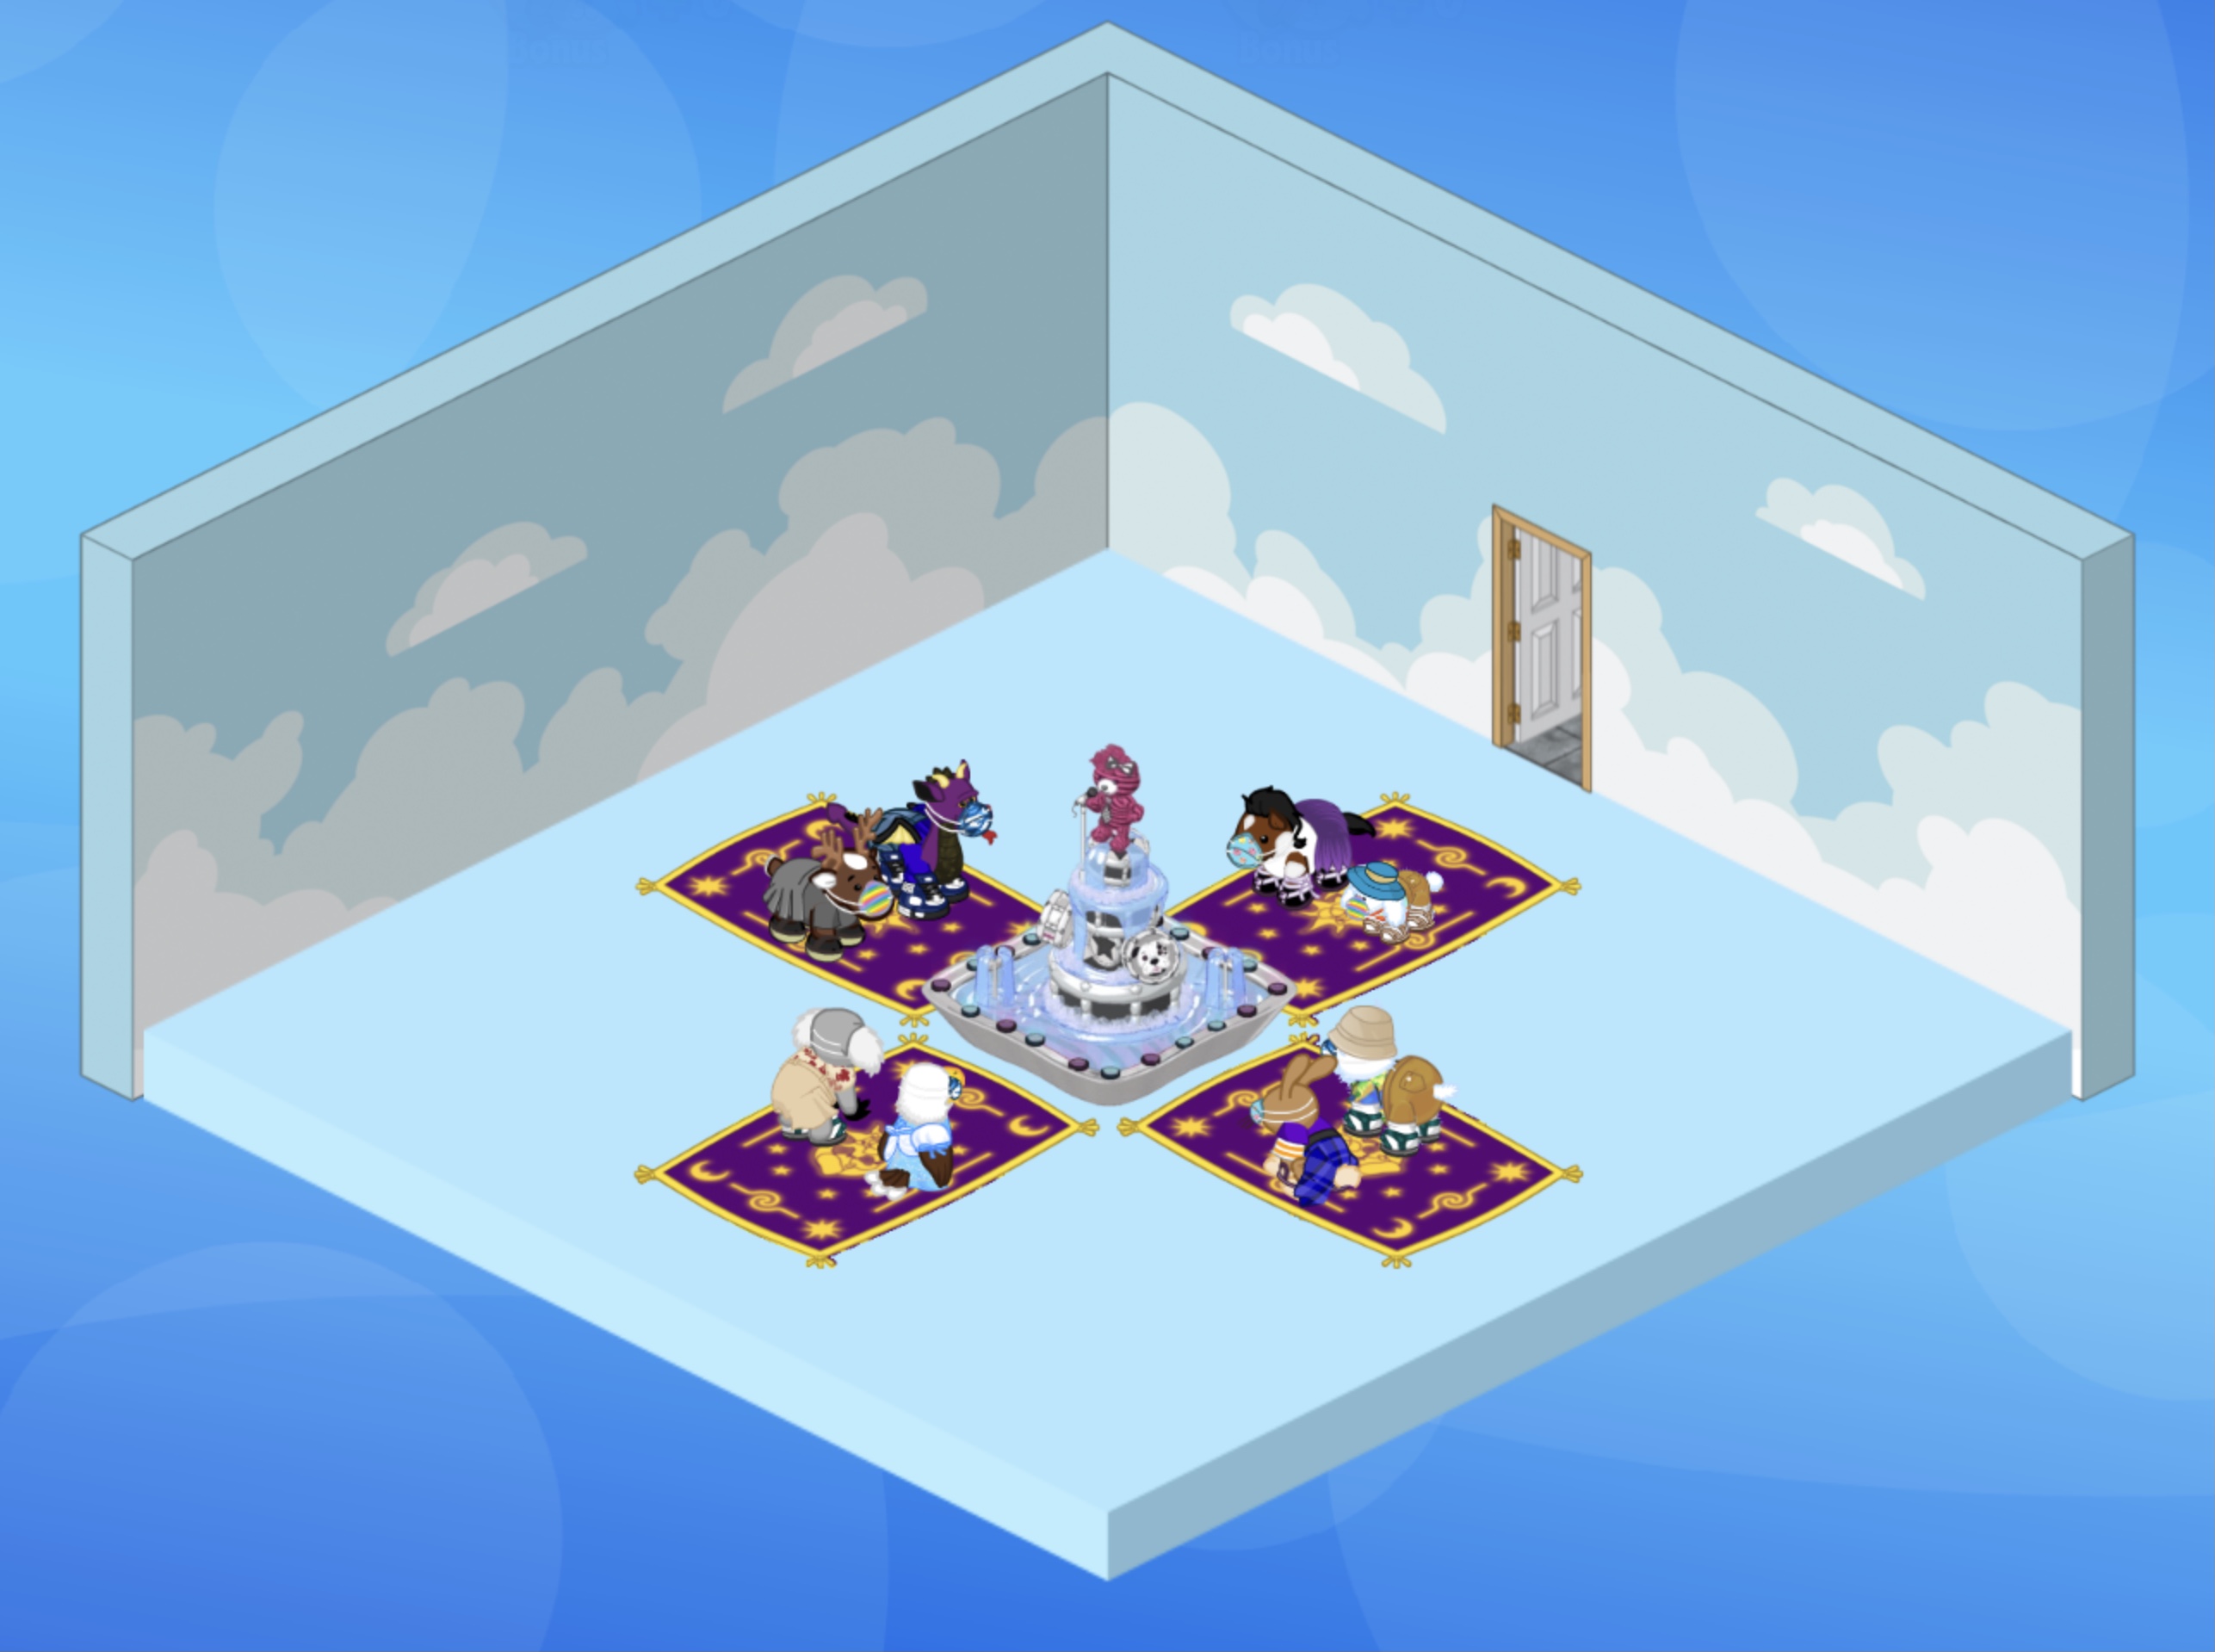 Webkinz re-creation of the Magic Carpets of Aladdin Disney World ride